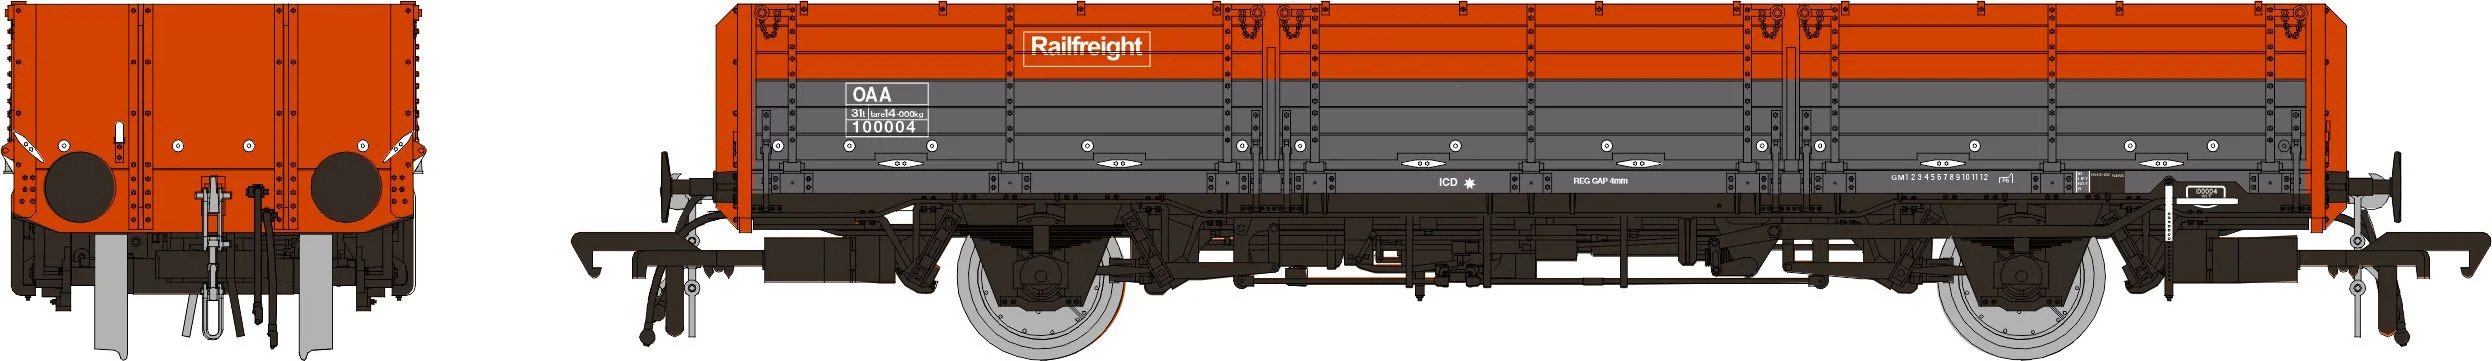 Rapido Trains 915010 OAA No. 100004, Railfreight red/grey